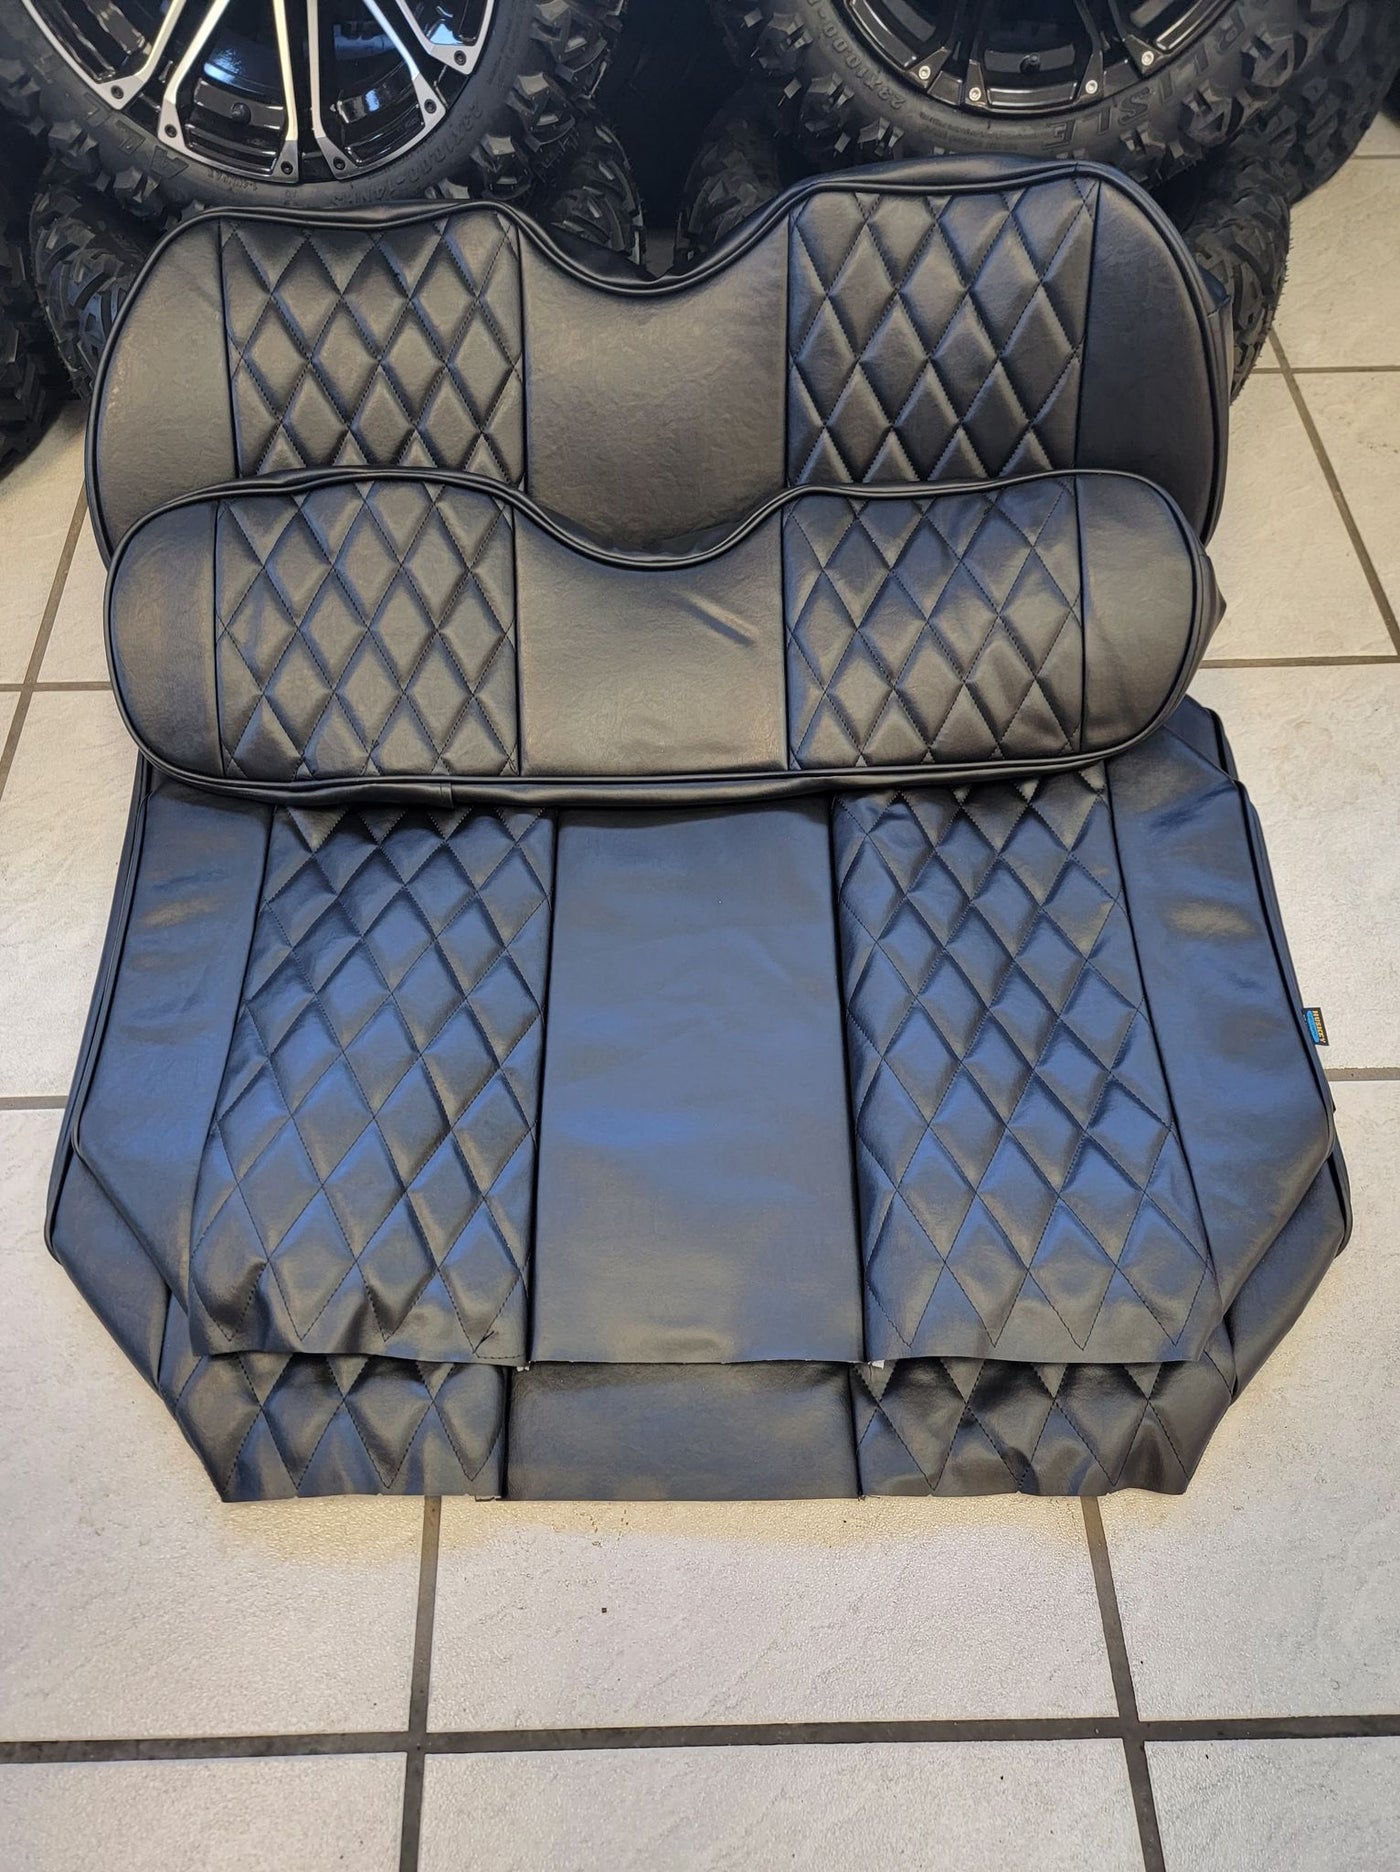 Bintelli Golf Cart Custom Diamond Stitch Black Seat Covers